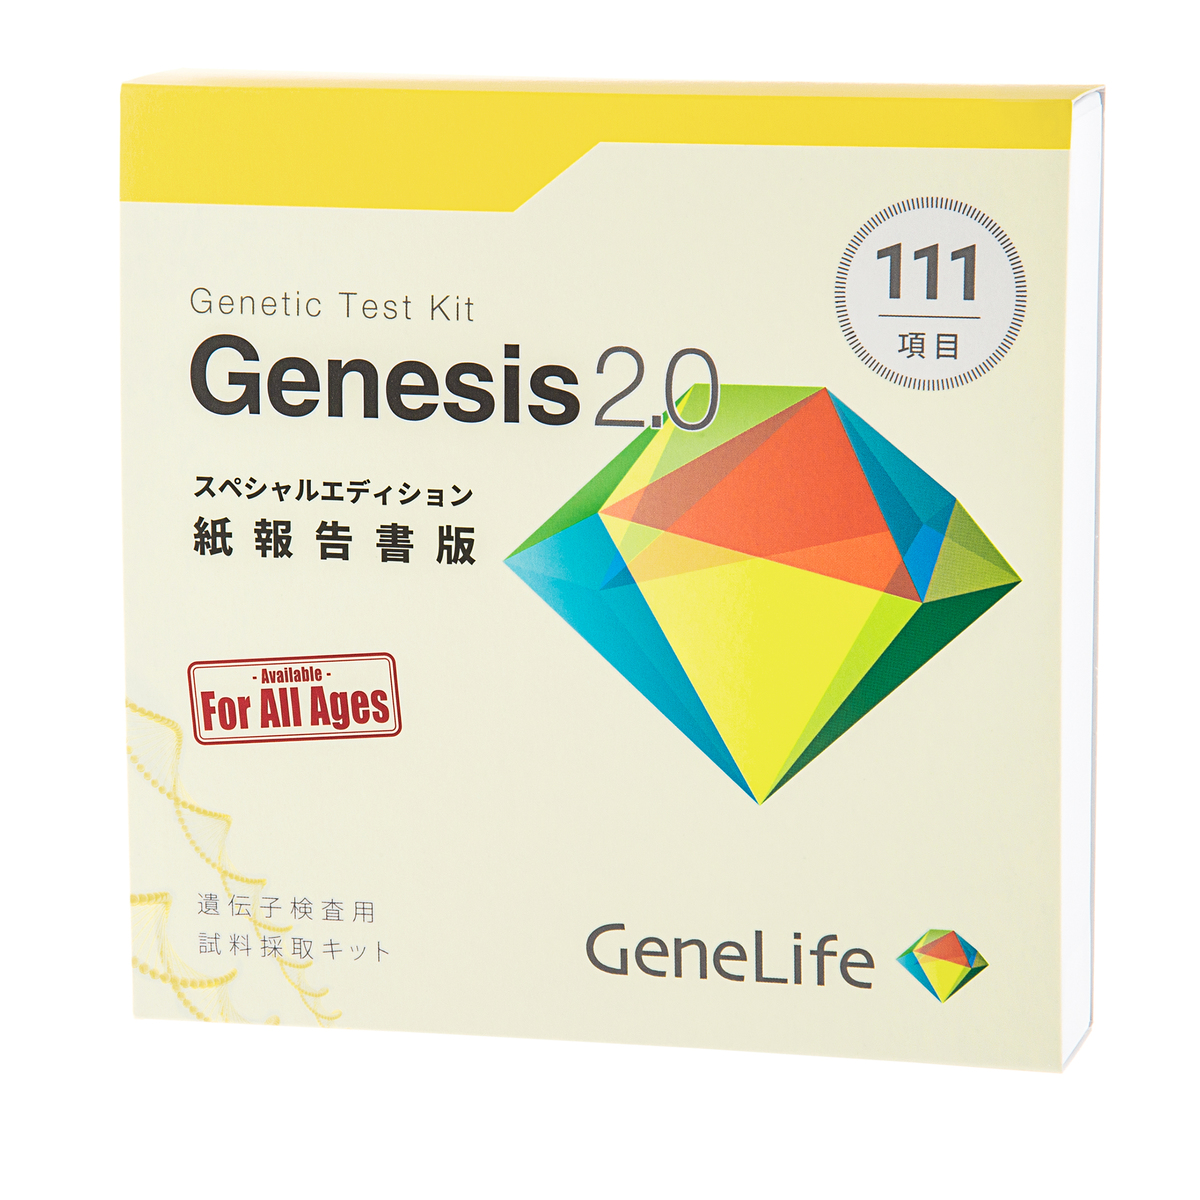 Genesis 遺伝子検査キット111項目[全年齢対象] - QVC.jp